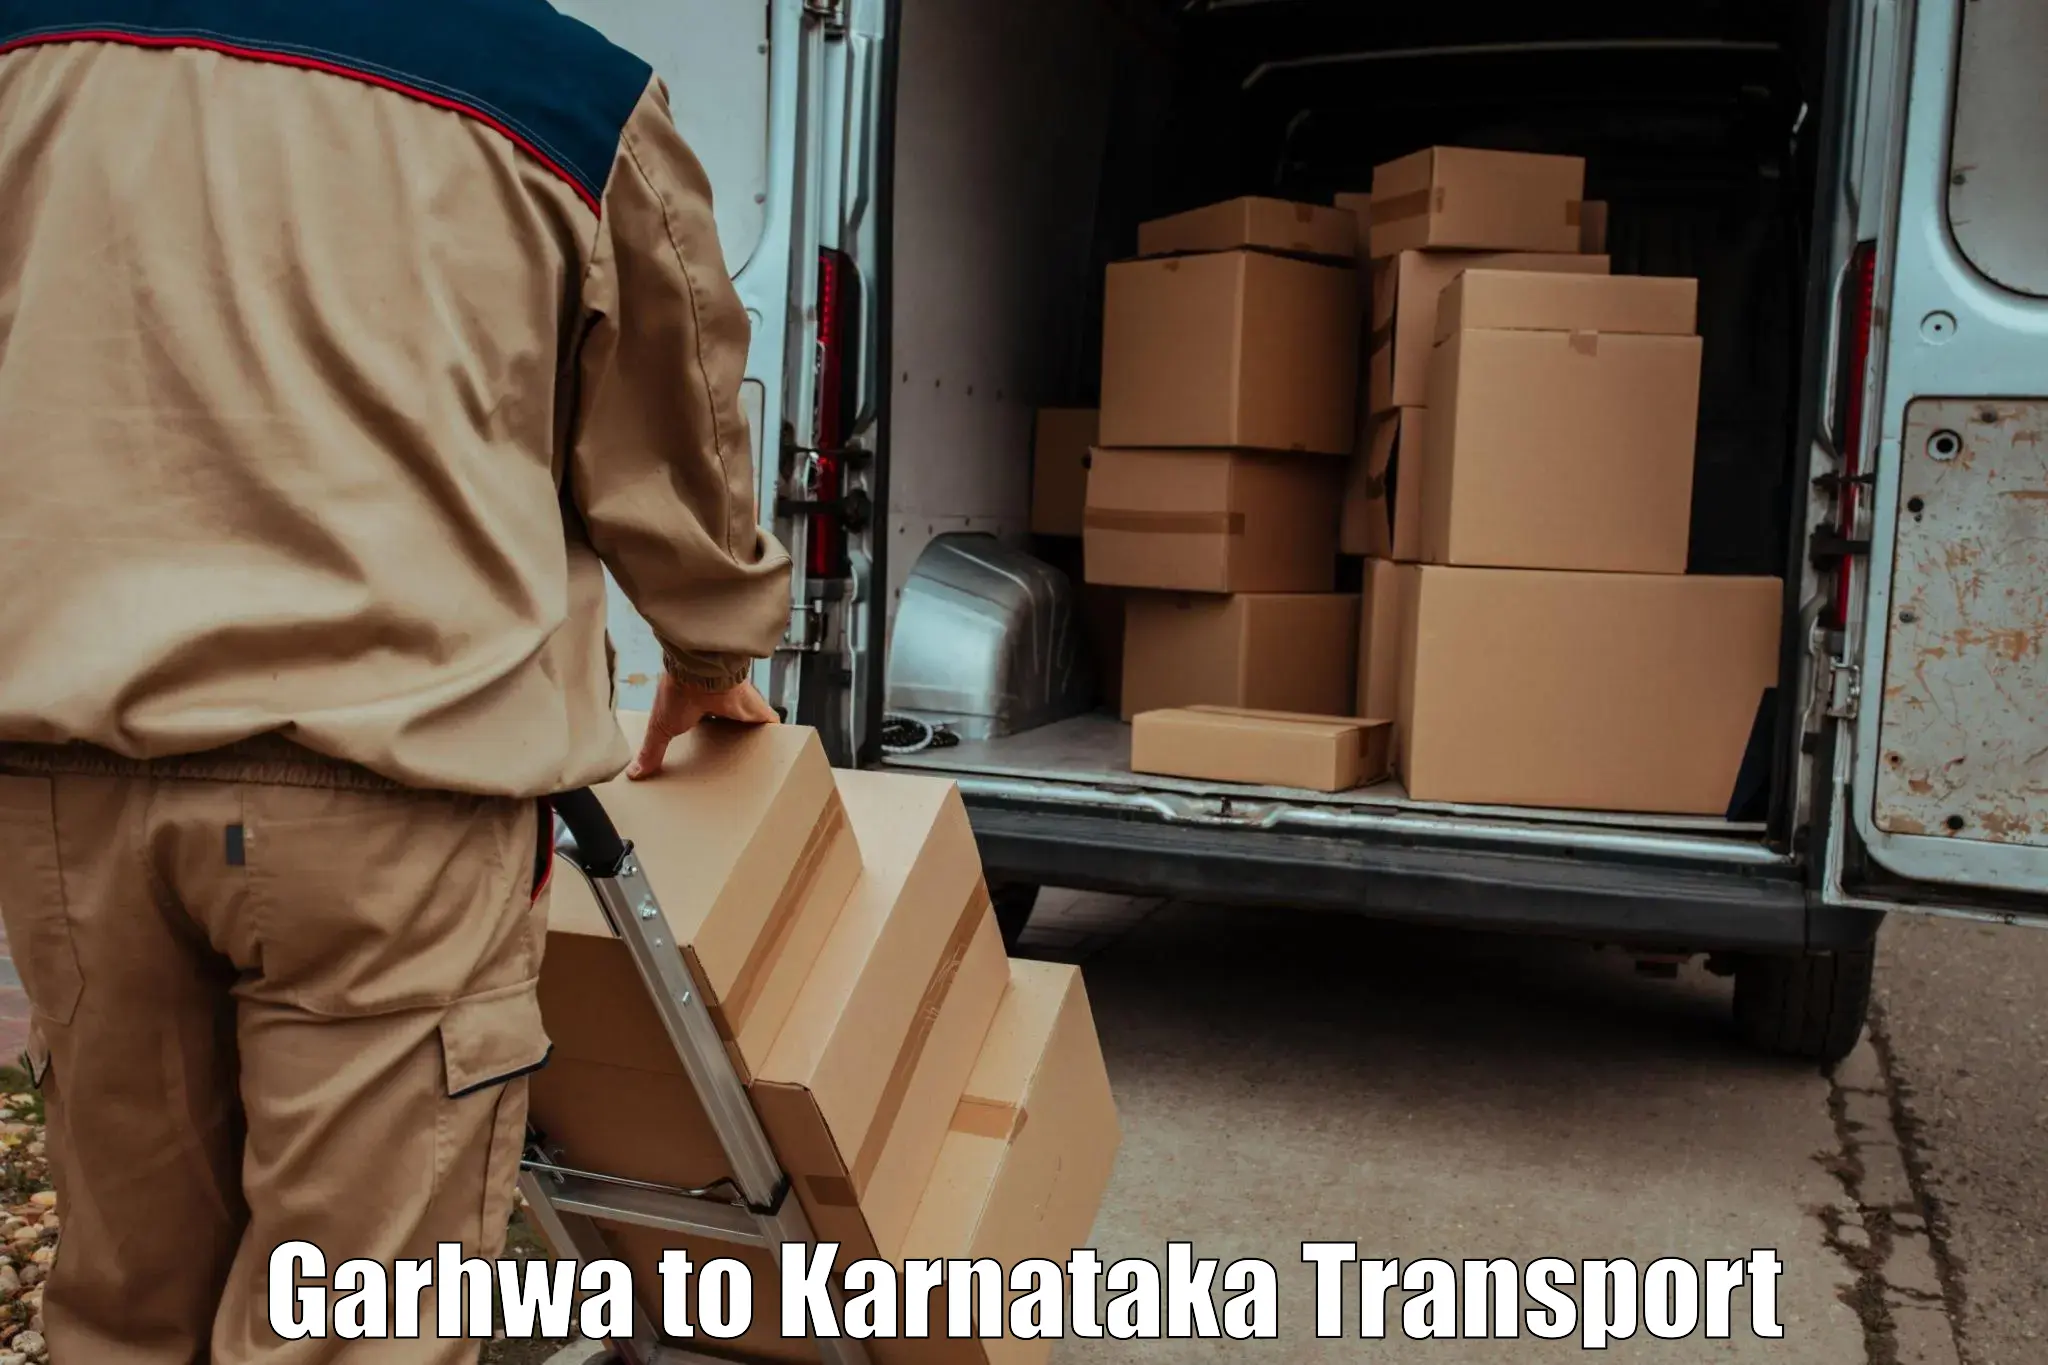 Pick up transport service in Garhwa to Hungund